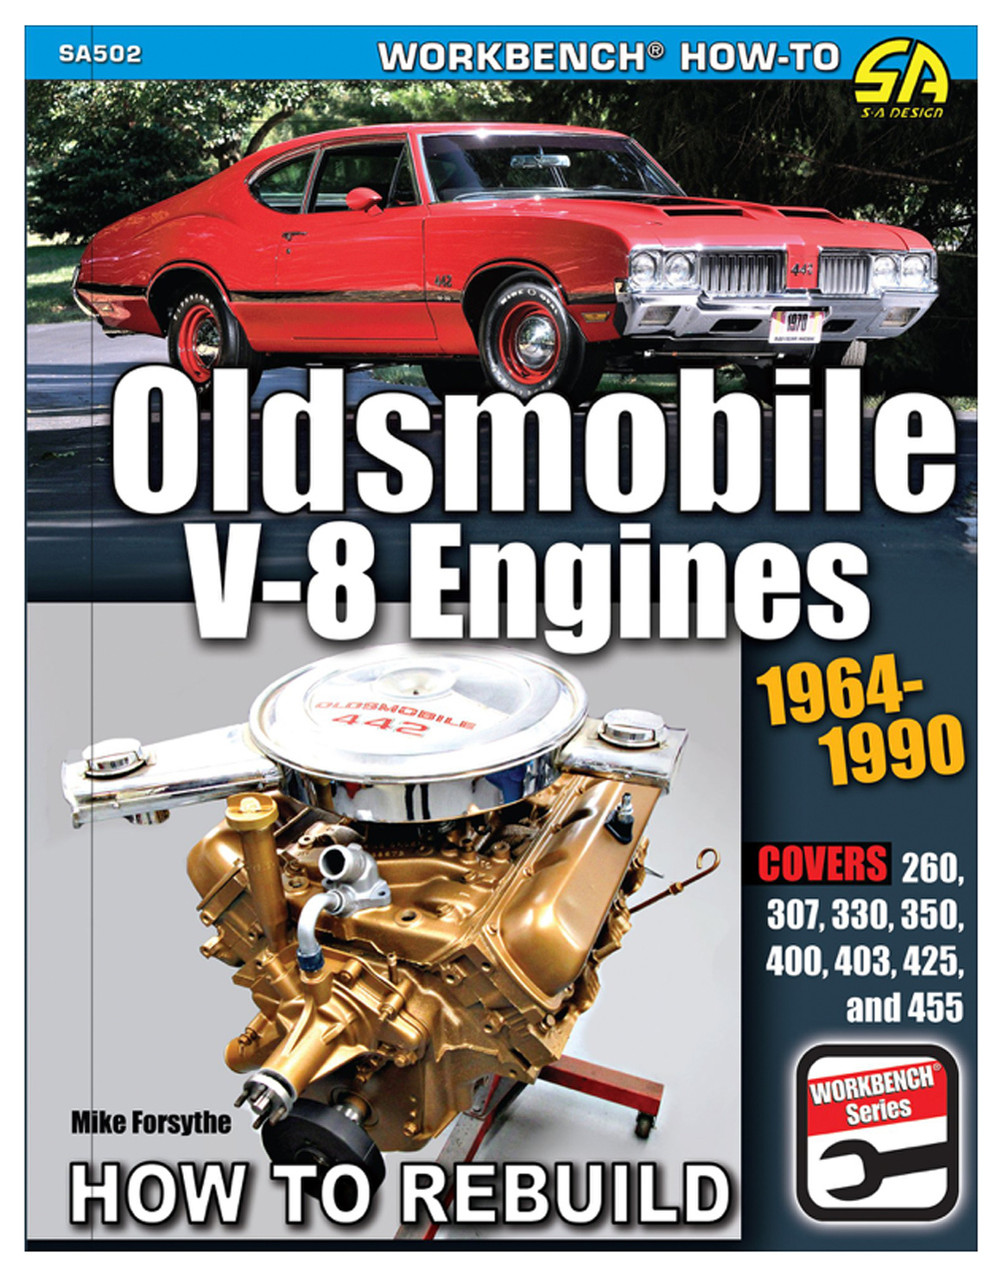 How To Rebuild Oldsmobil e 64-90 V8 Engines